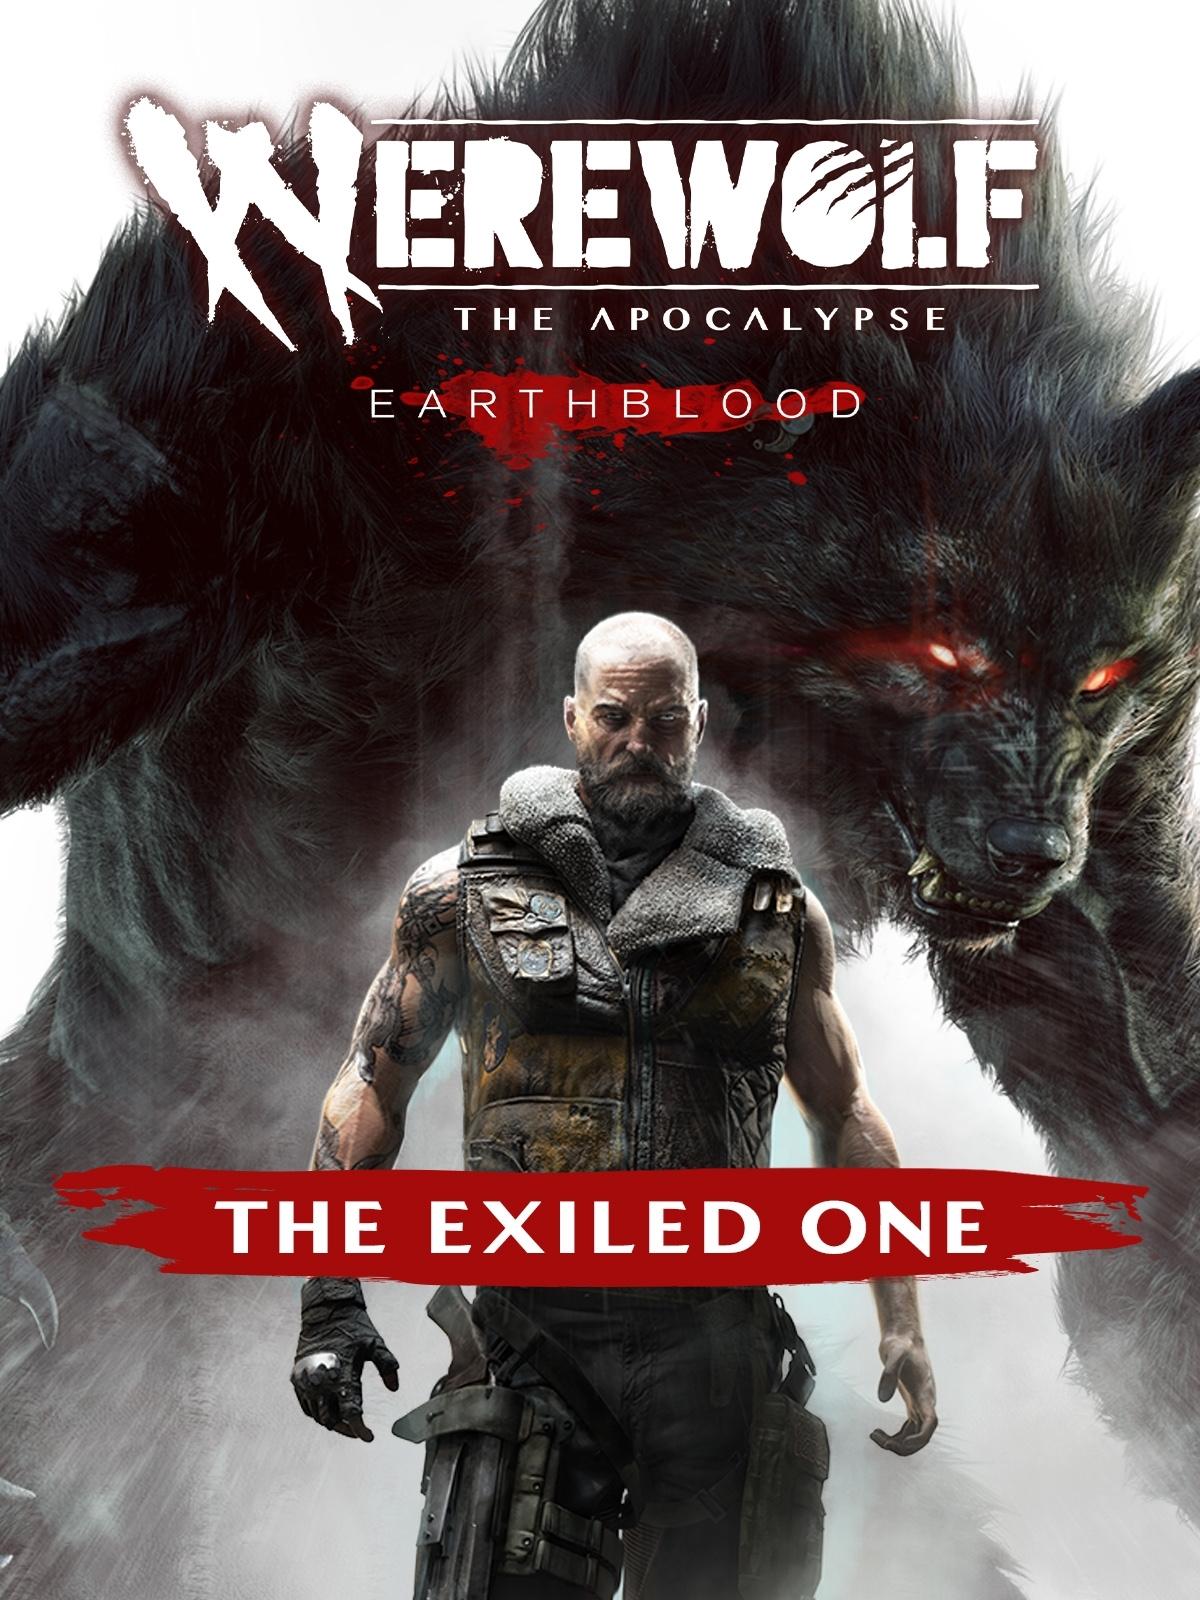 Werewolf: The Apocalypse - Earthblood The Exiled One DLC | ROW (9f6b2508-3c3c-4dab-b371-5493ca002b6c)